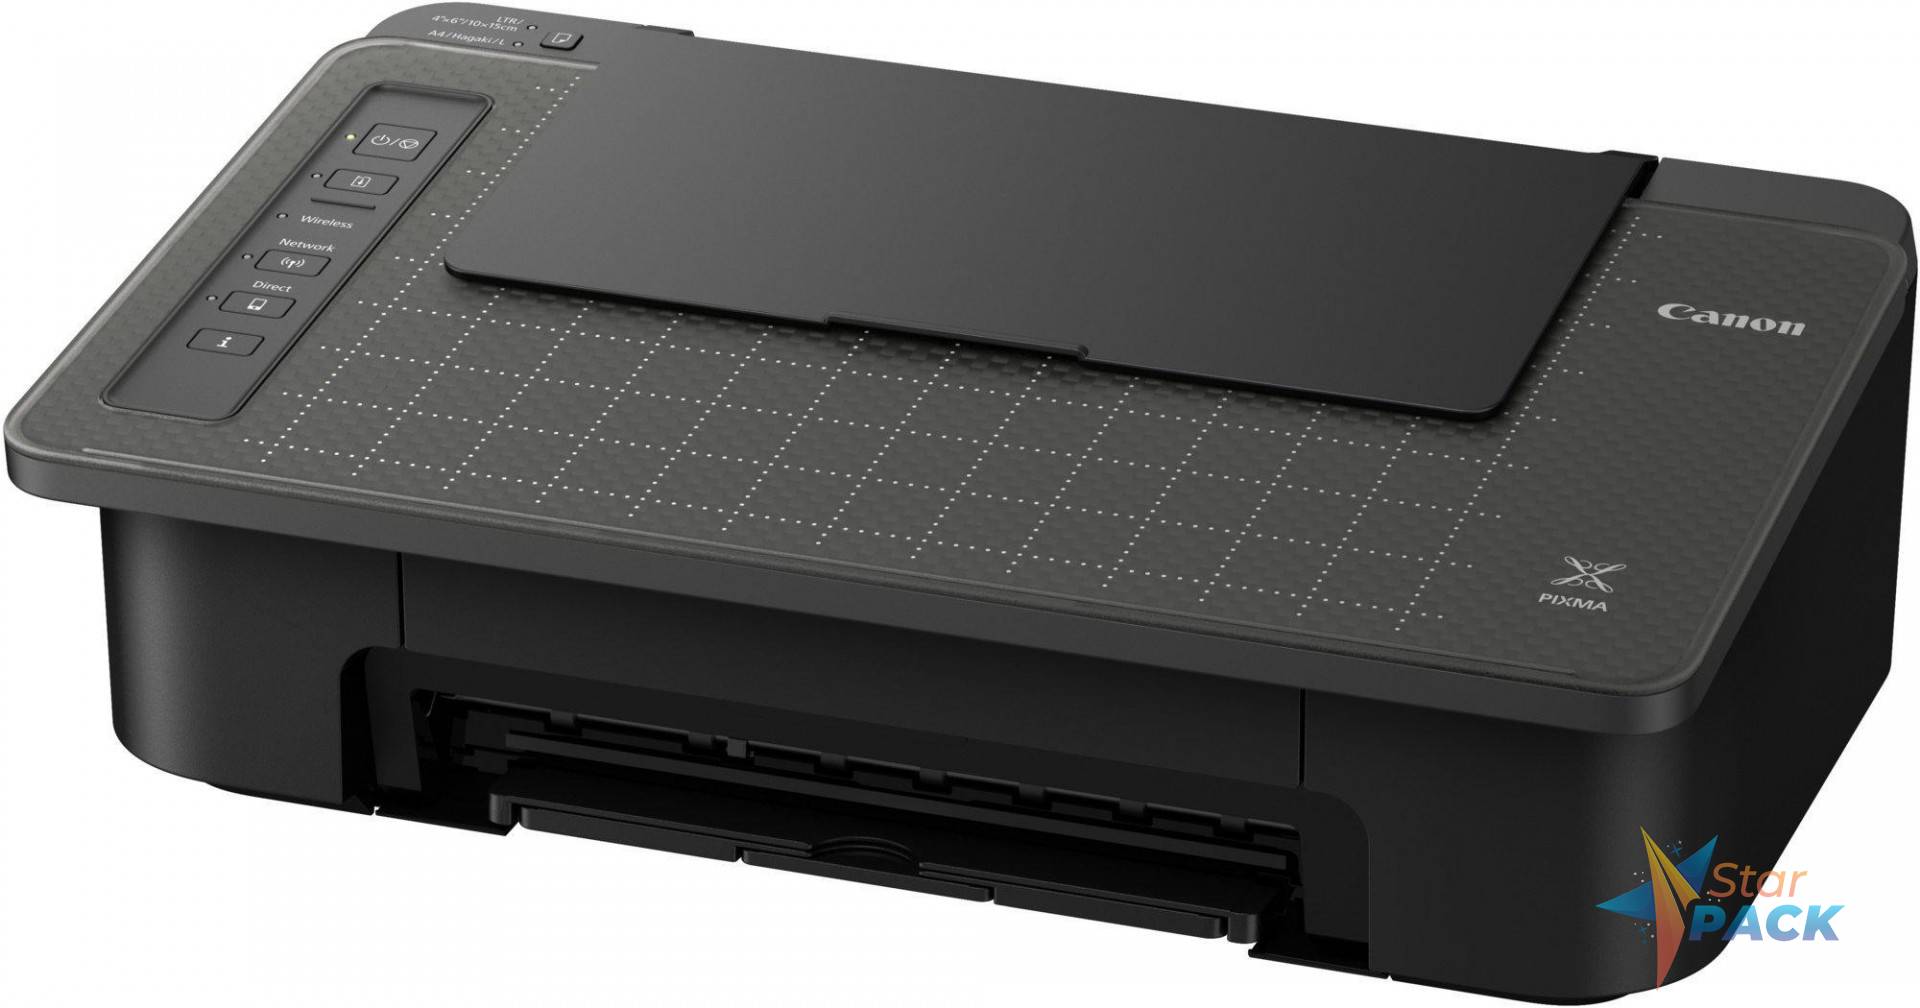 Imprimanta Inkjet Color Canon Pixma TS305, A4, Functii: Impr., Viteza de Printare Monocrom: 7.7ipm, Viteza de printare color: 4ipm, Conectivitate:USB|Ret, Duplex:Nu, ADF:Nu